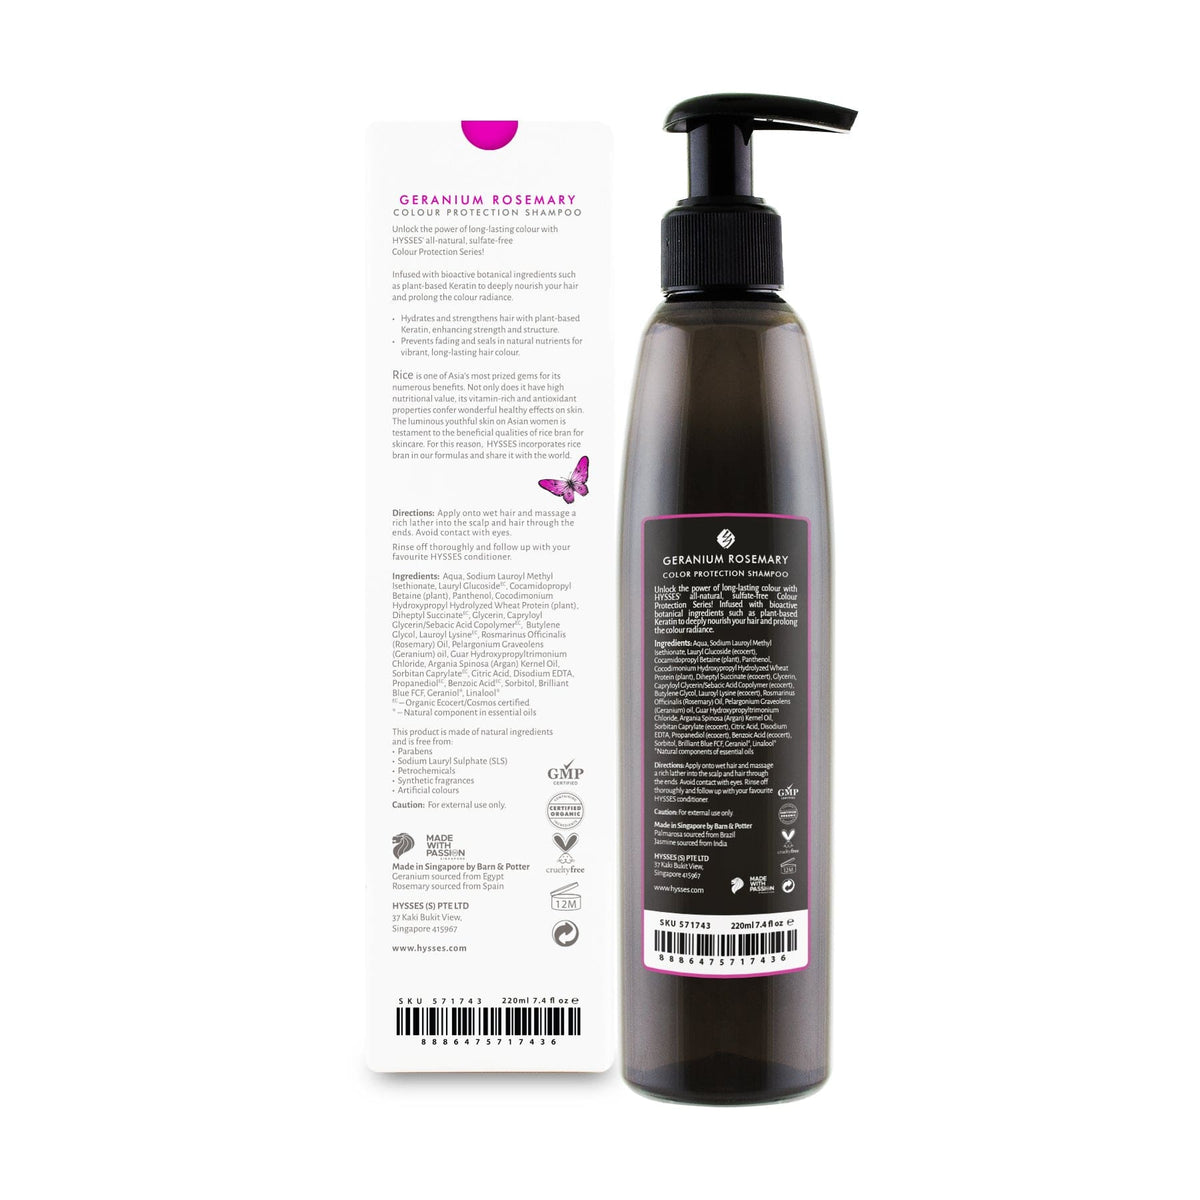 Hysses Hair Care Colour Protection Shampoo, Geranium Rosemary